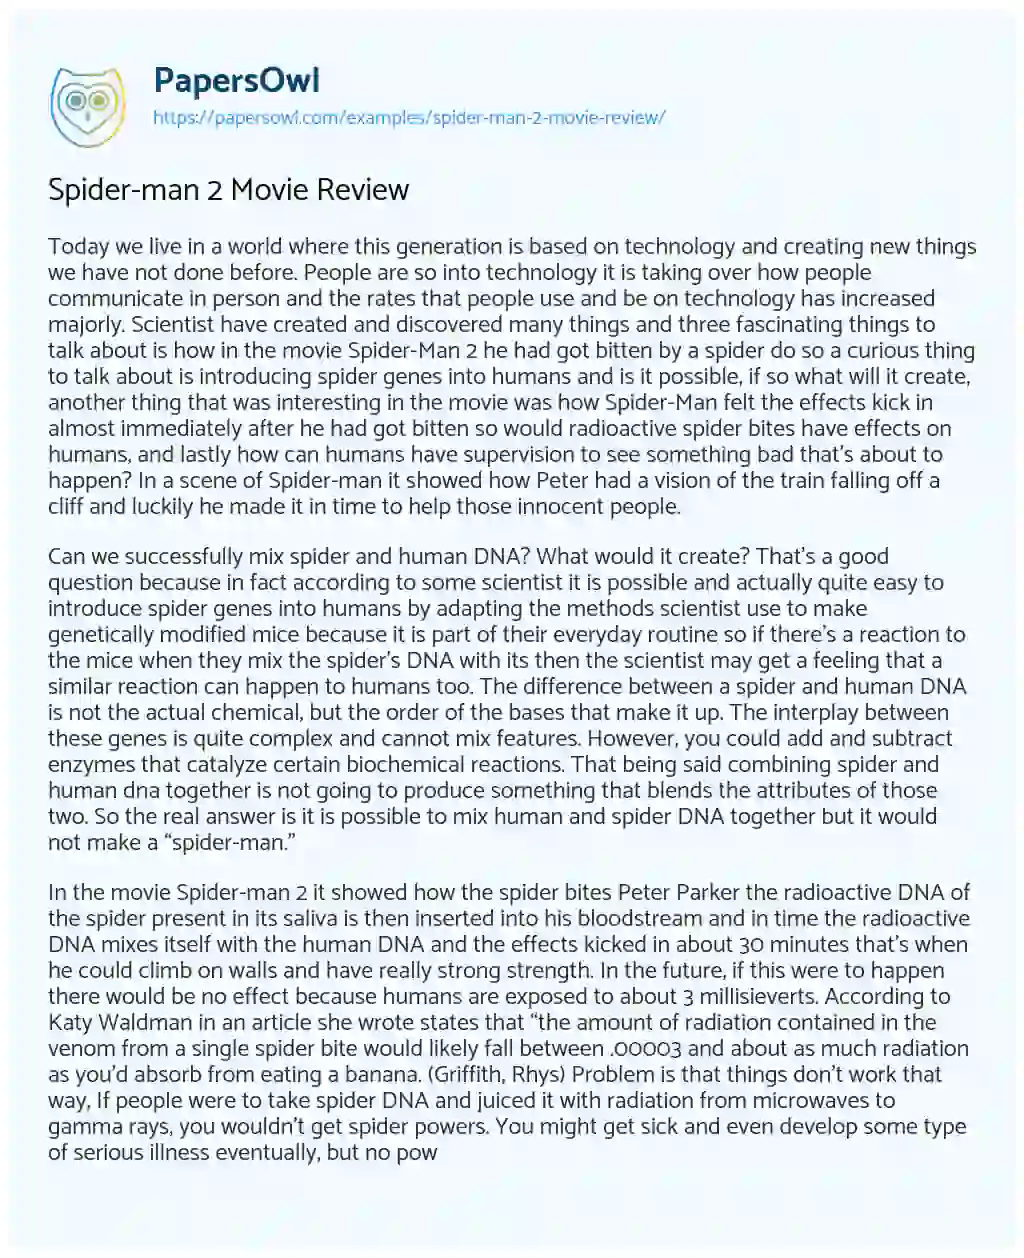 Essay on Spider-man 2 Movie Review